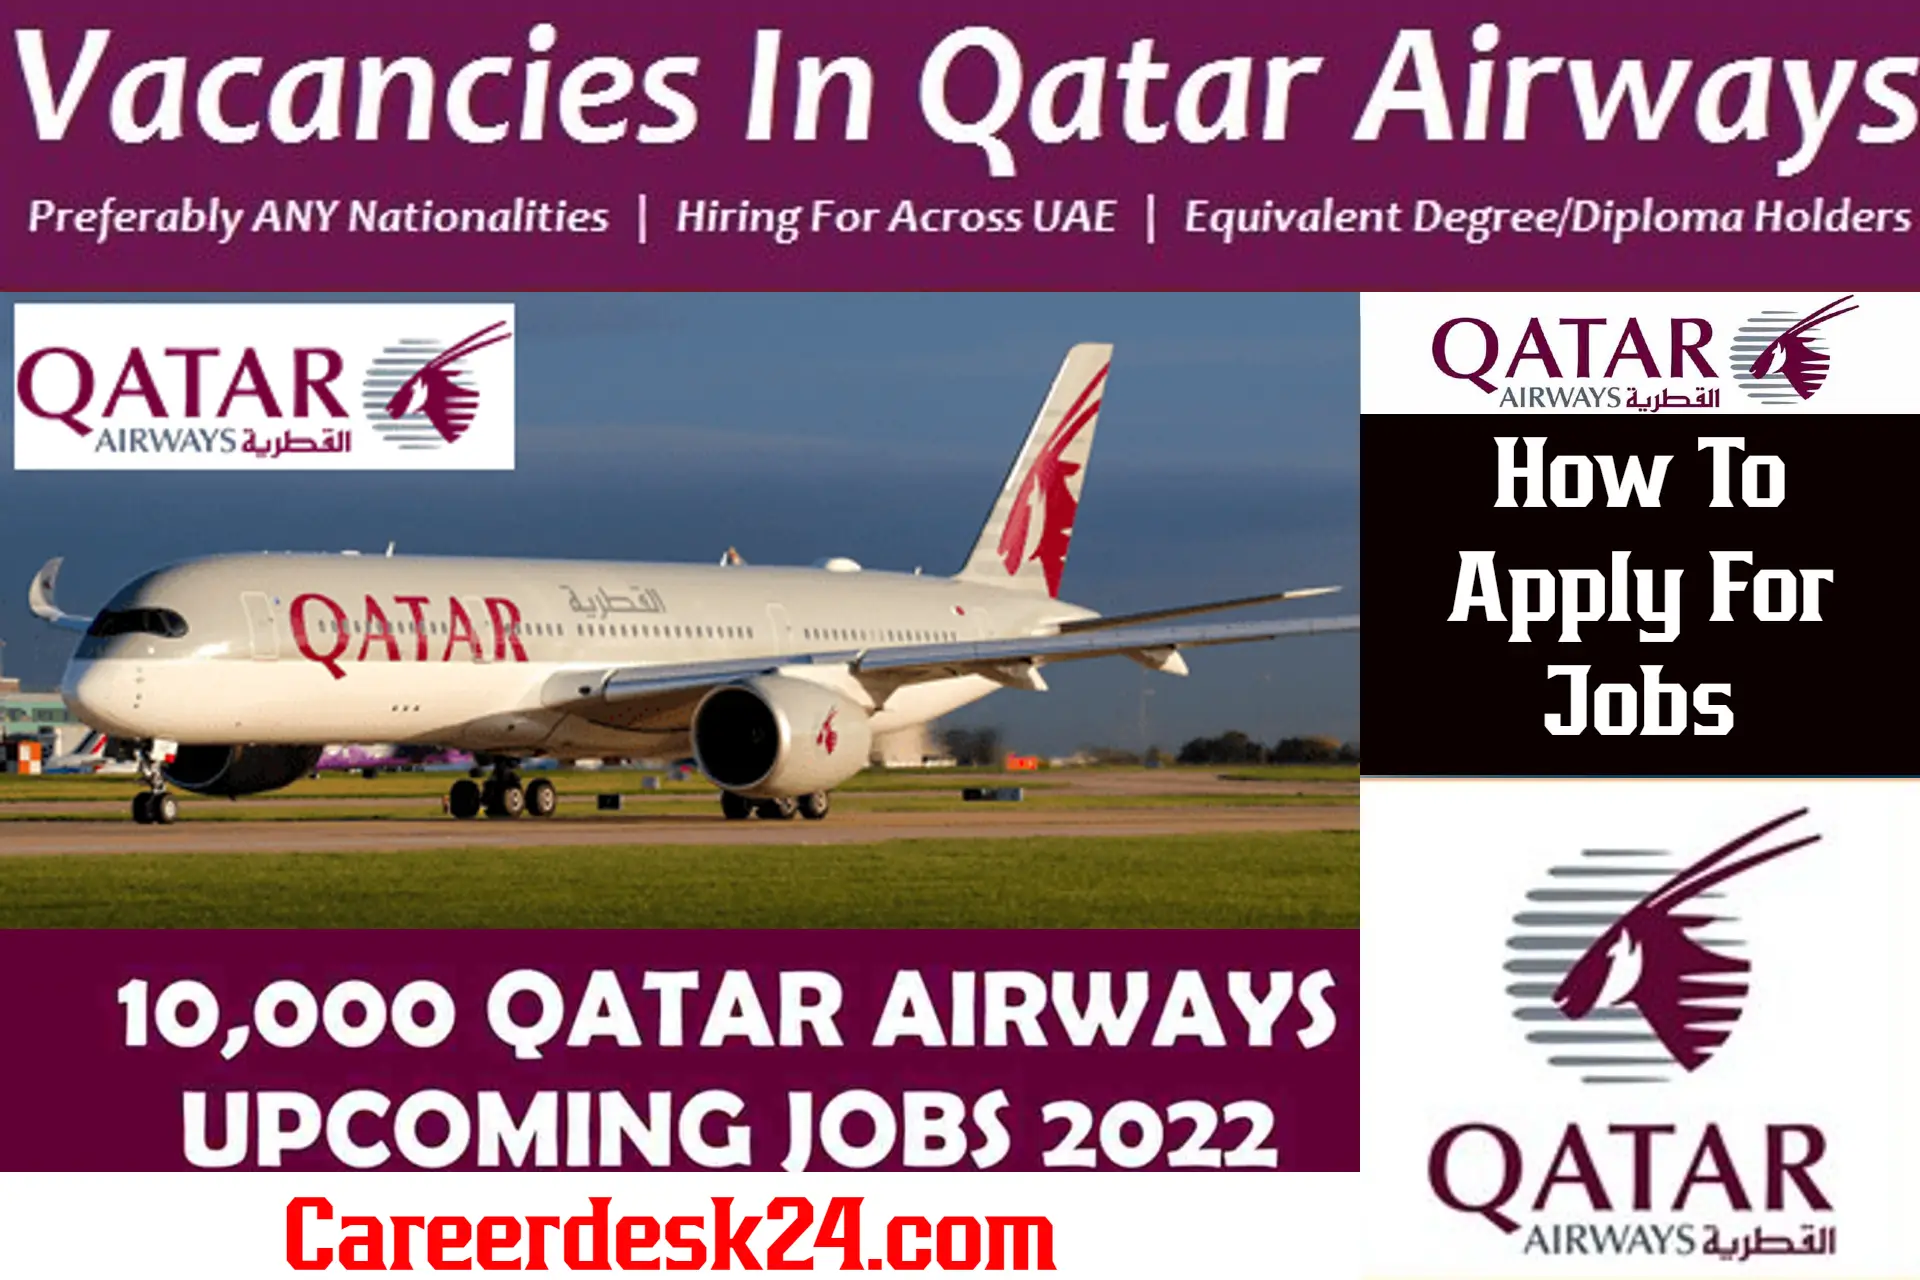 Qatar Airways Careers 10,000 Upcoming Jobs in Qatar Airways 2022